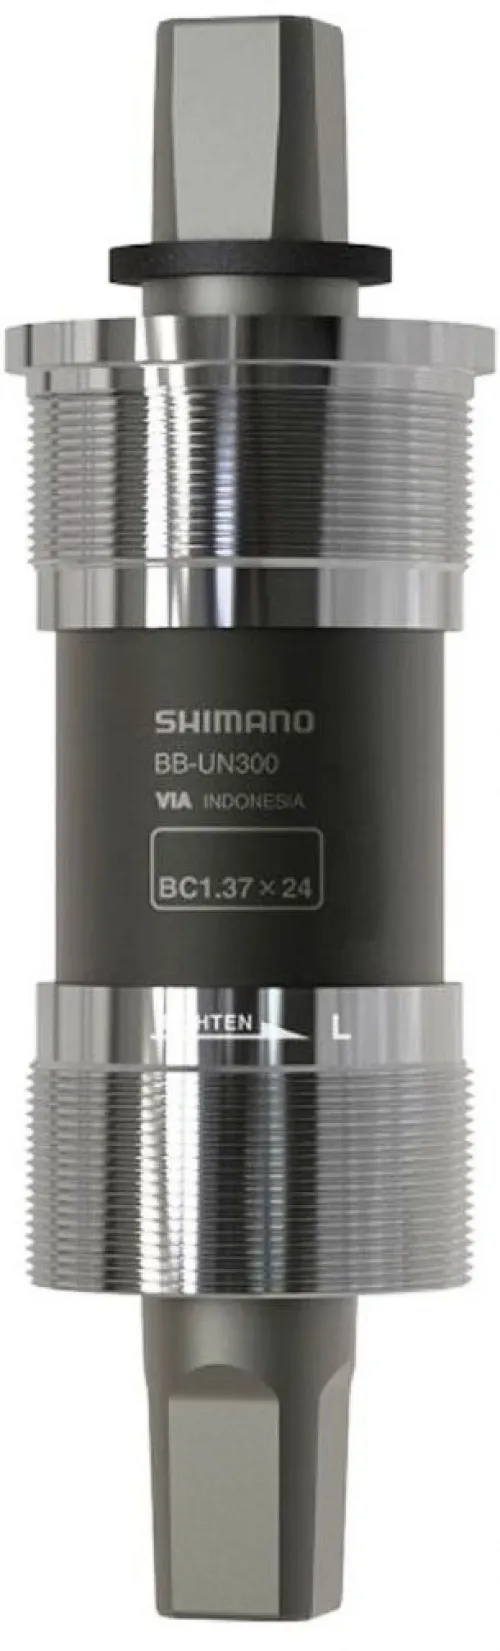 Каретка Shimano BB-UN300 BSA 68x127.5мм, 1.37x24, с болтами